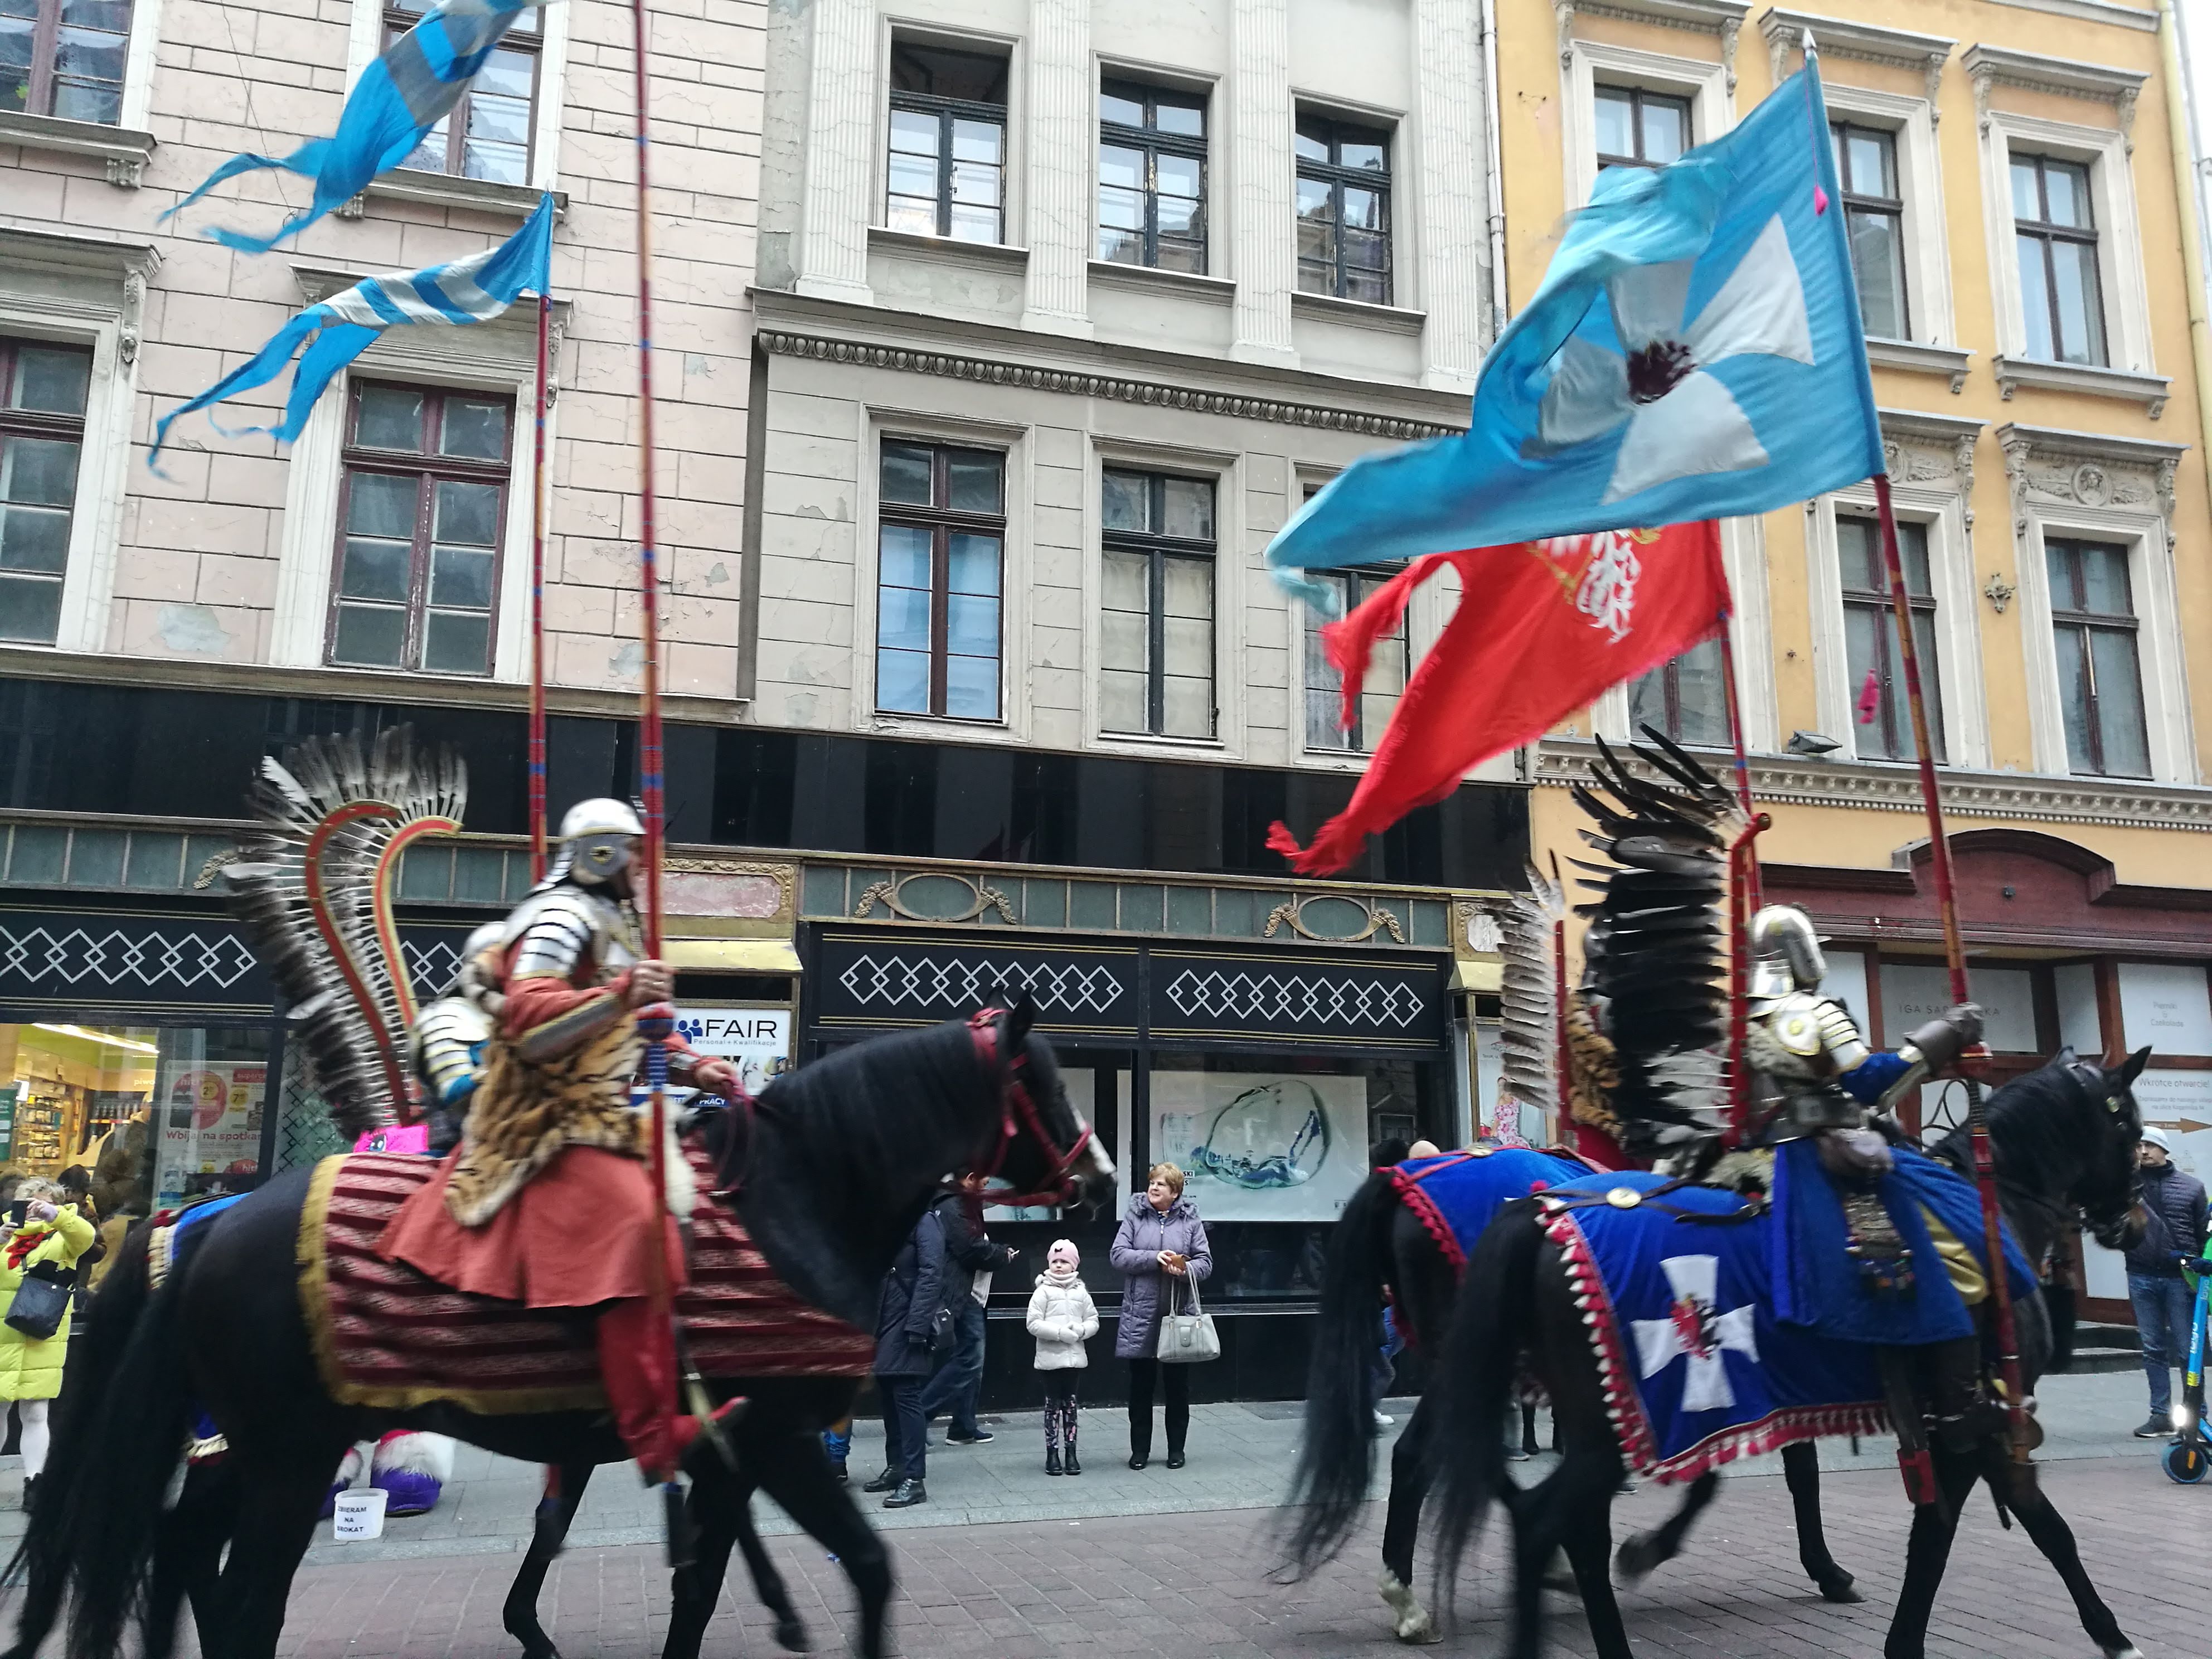 Horseback knights marching through a city